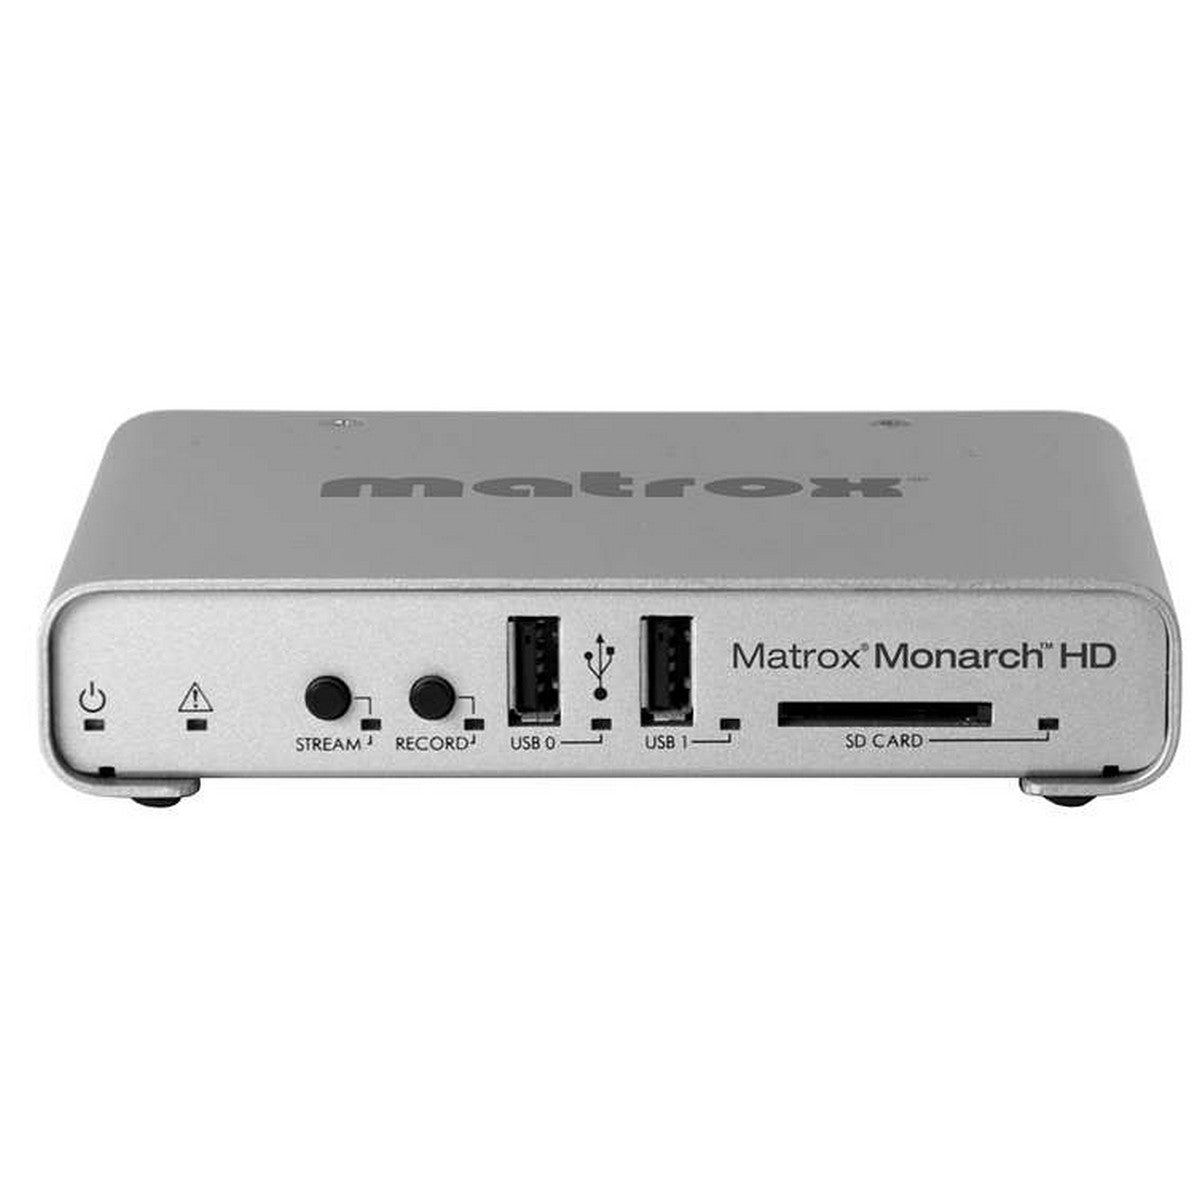 Matrox MHD/I | Matrox Monarch HD Professional Streaming and Recording Appliance